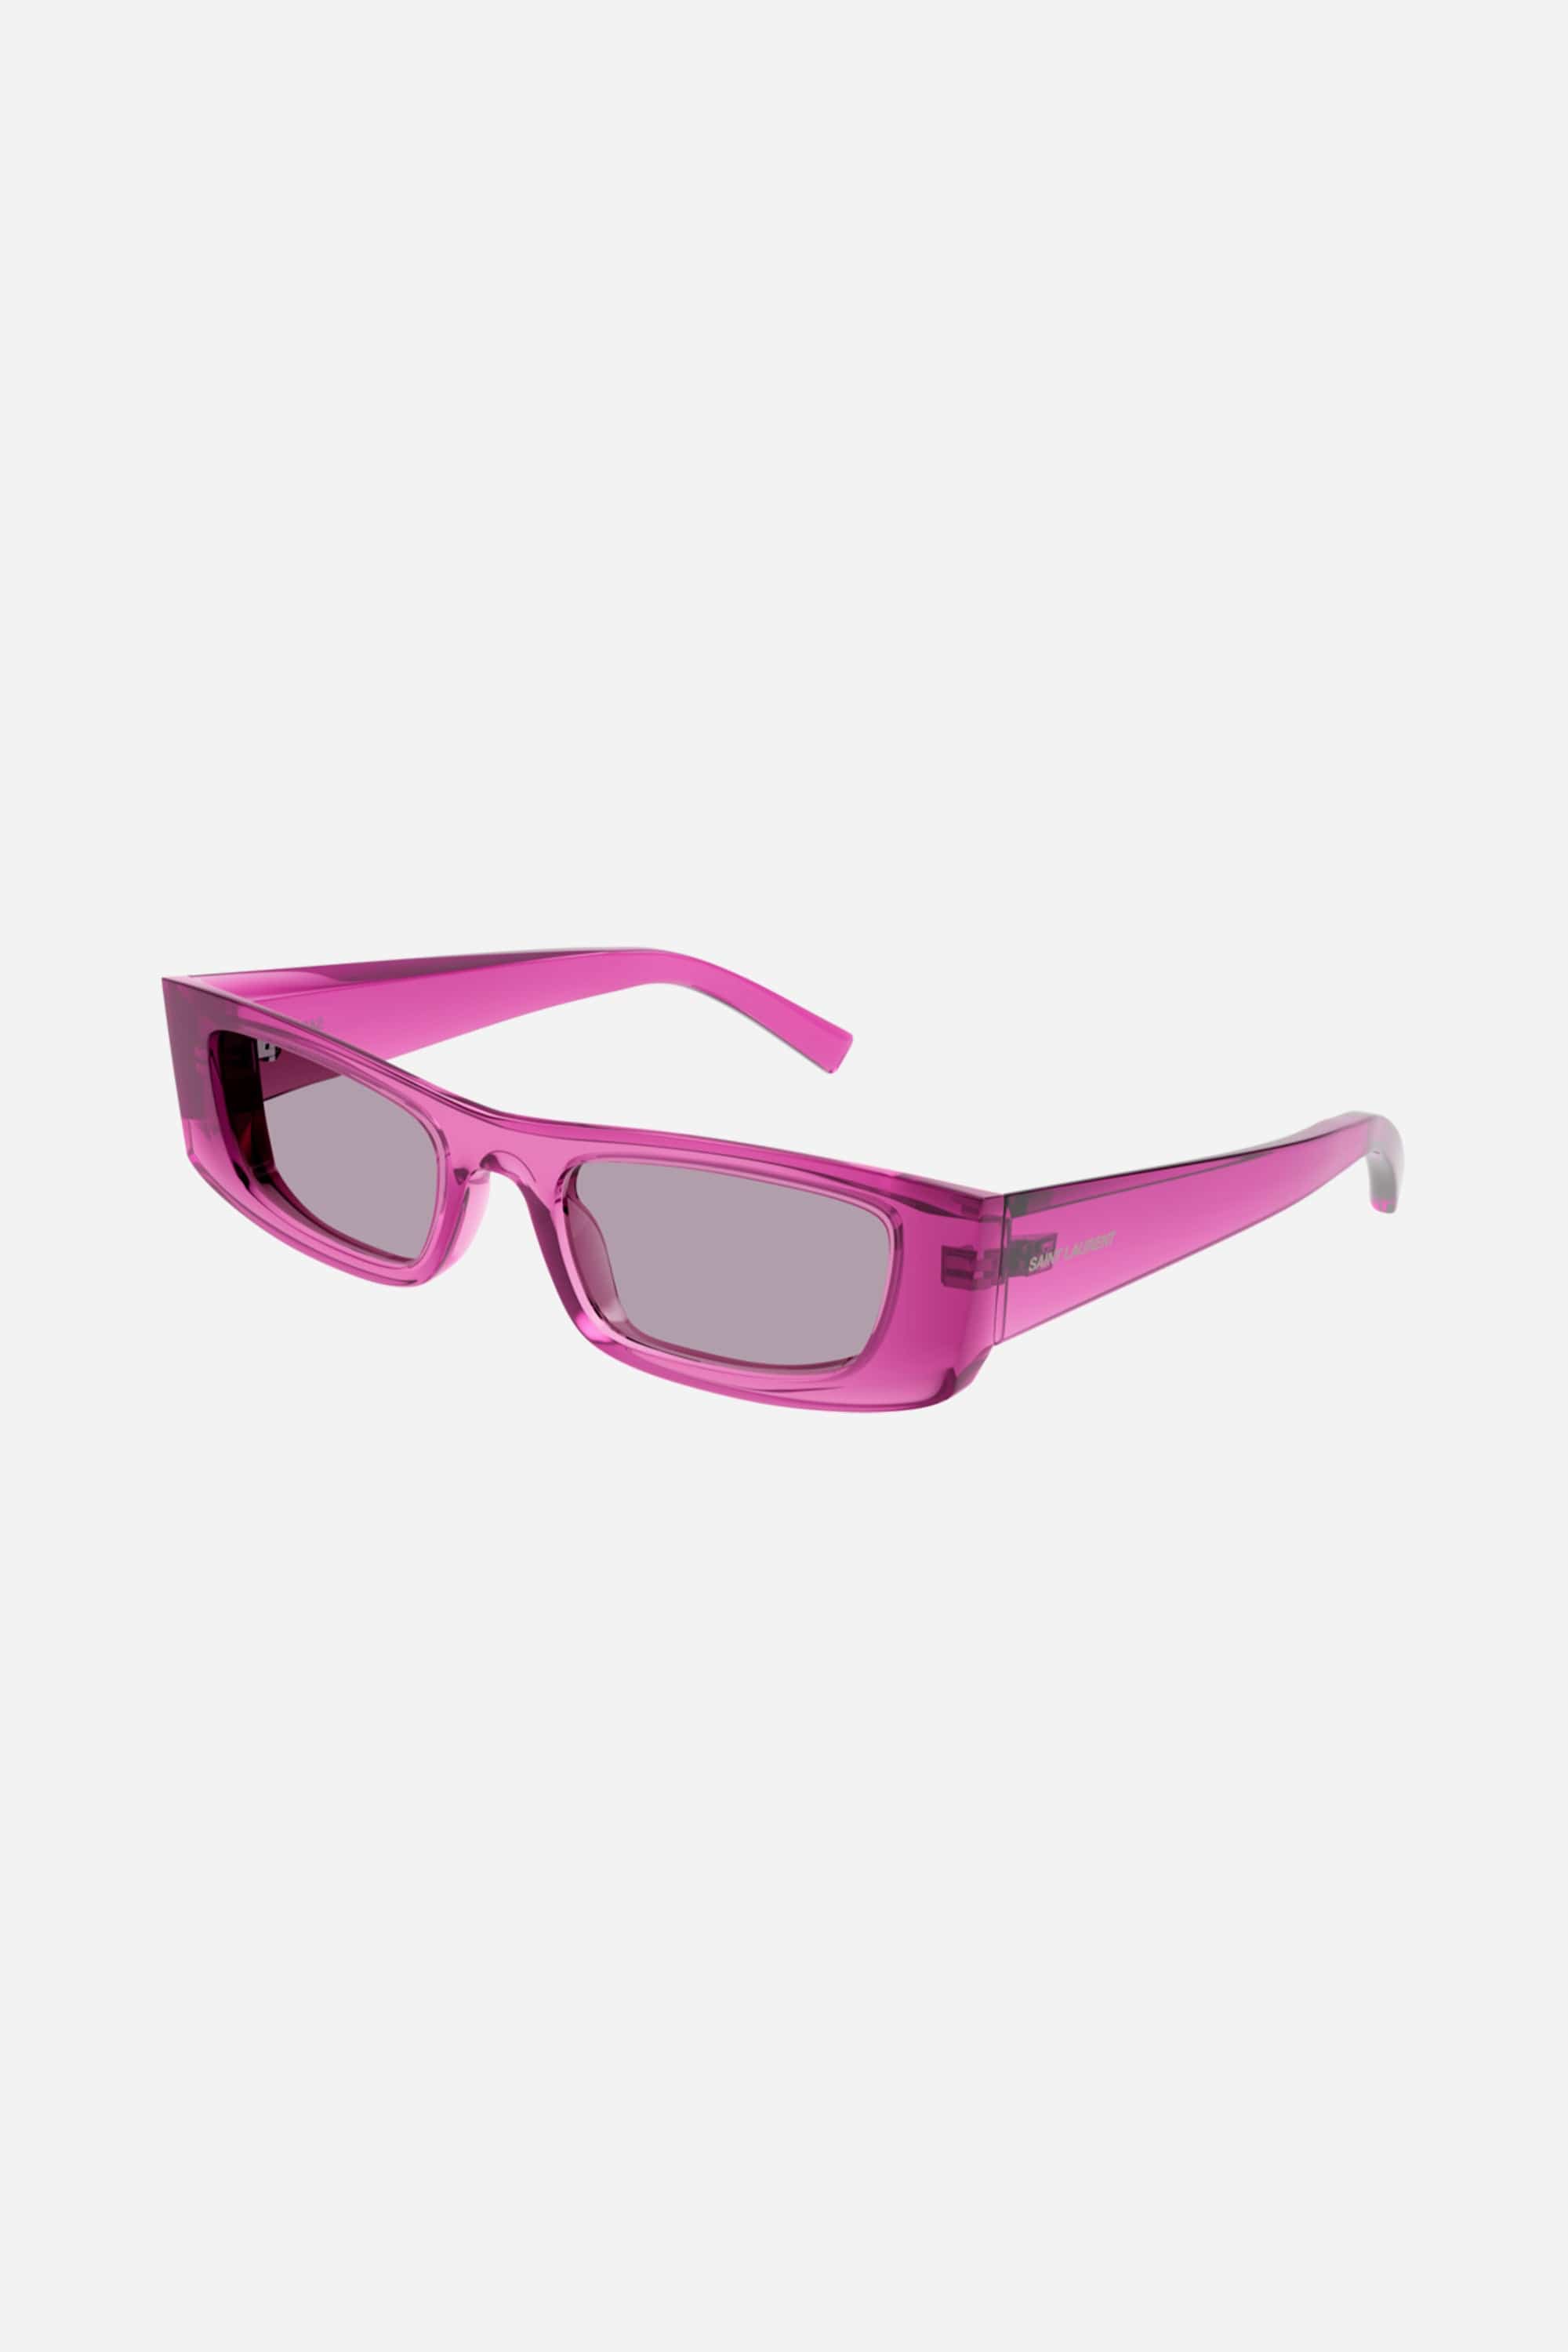 Saint Laurent rectangular pink sunglasses - Eyewear Club